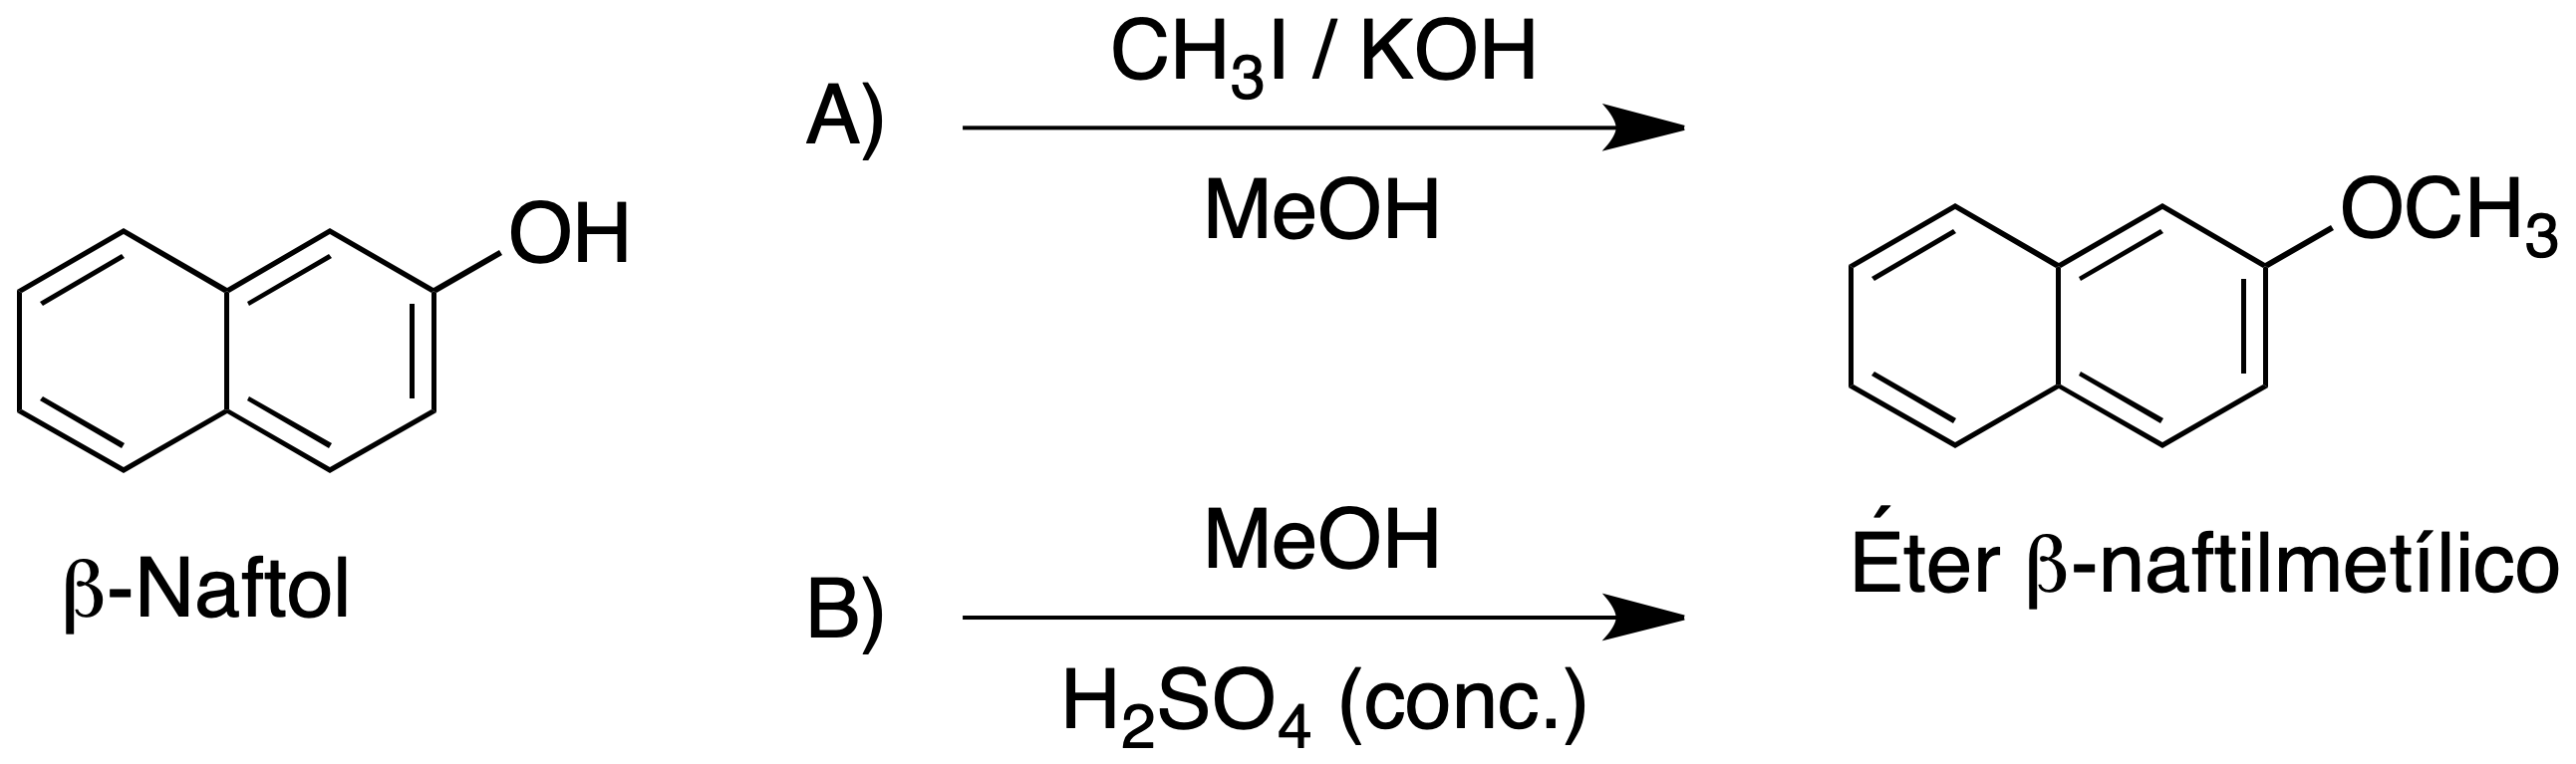 synthesis β-naphthyl methyl ether Williamson